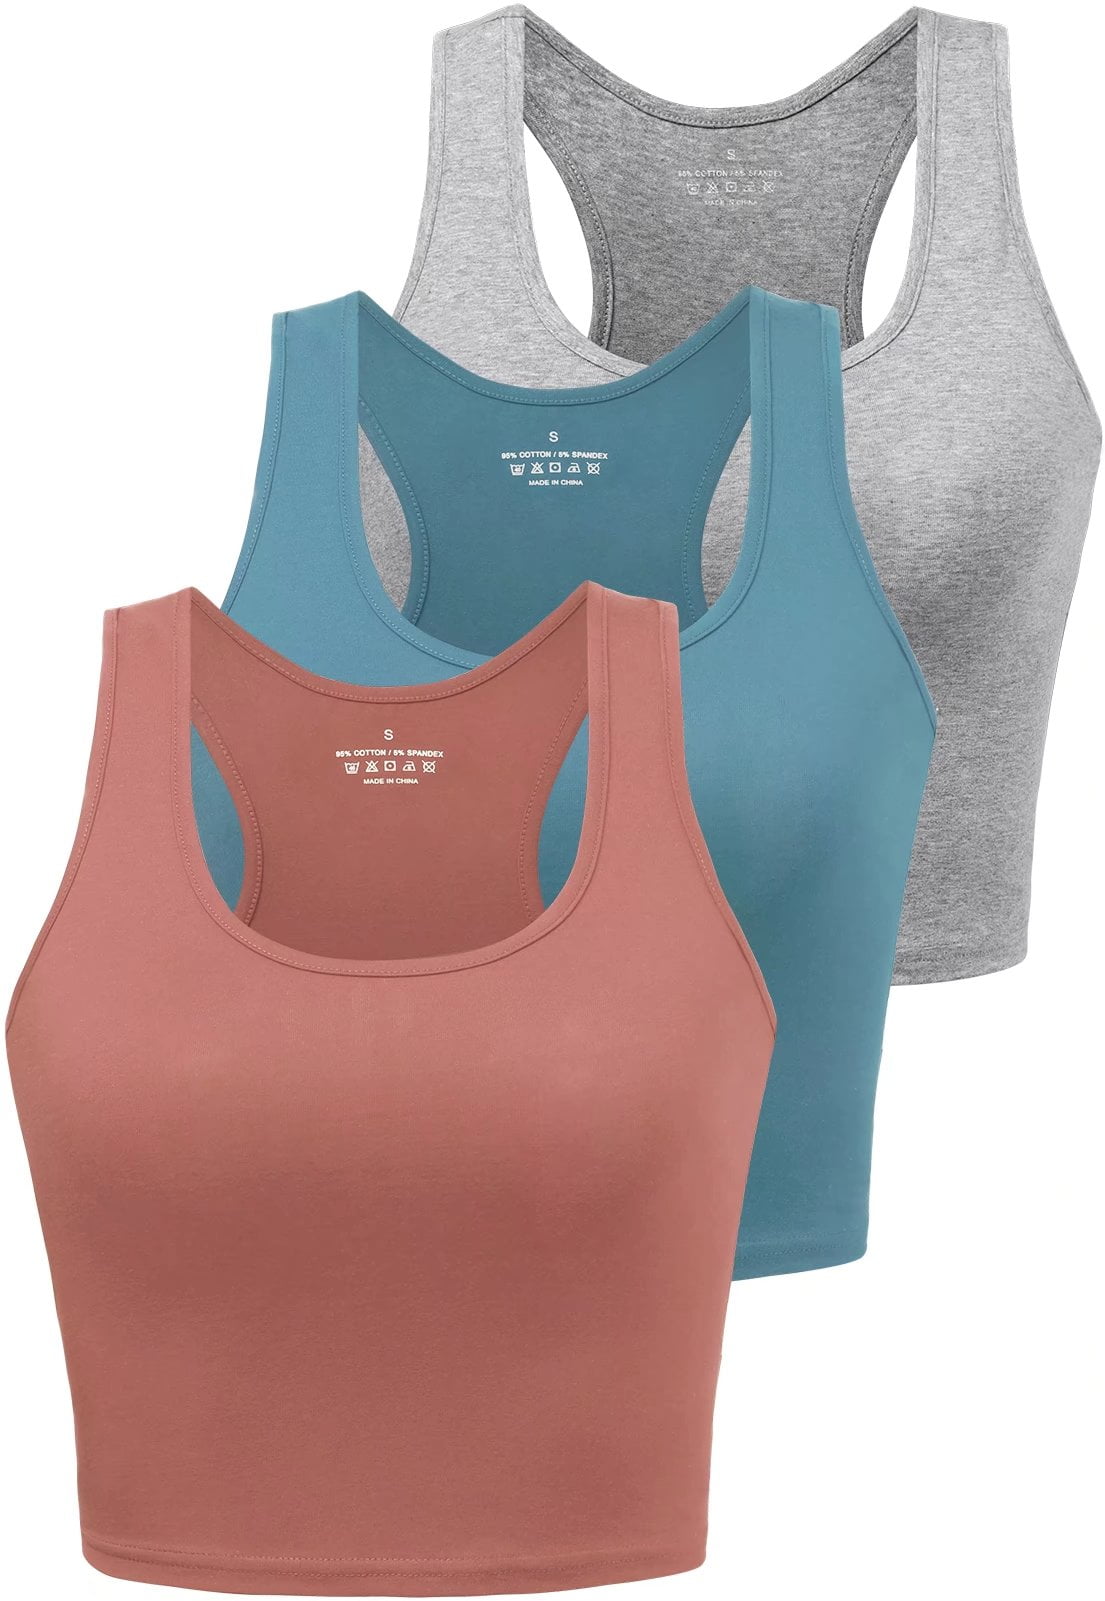 Porvike Crop Tops for Women Workout Tanks Racerback Cropped Yoga Shirts ...